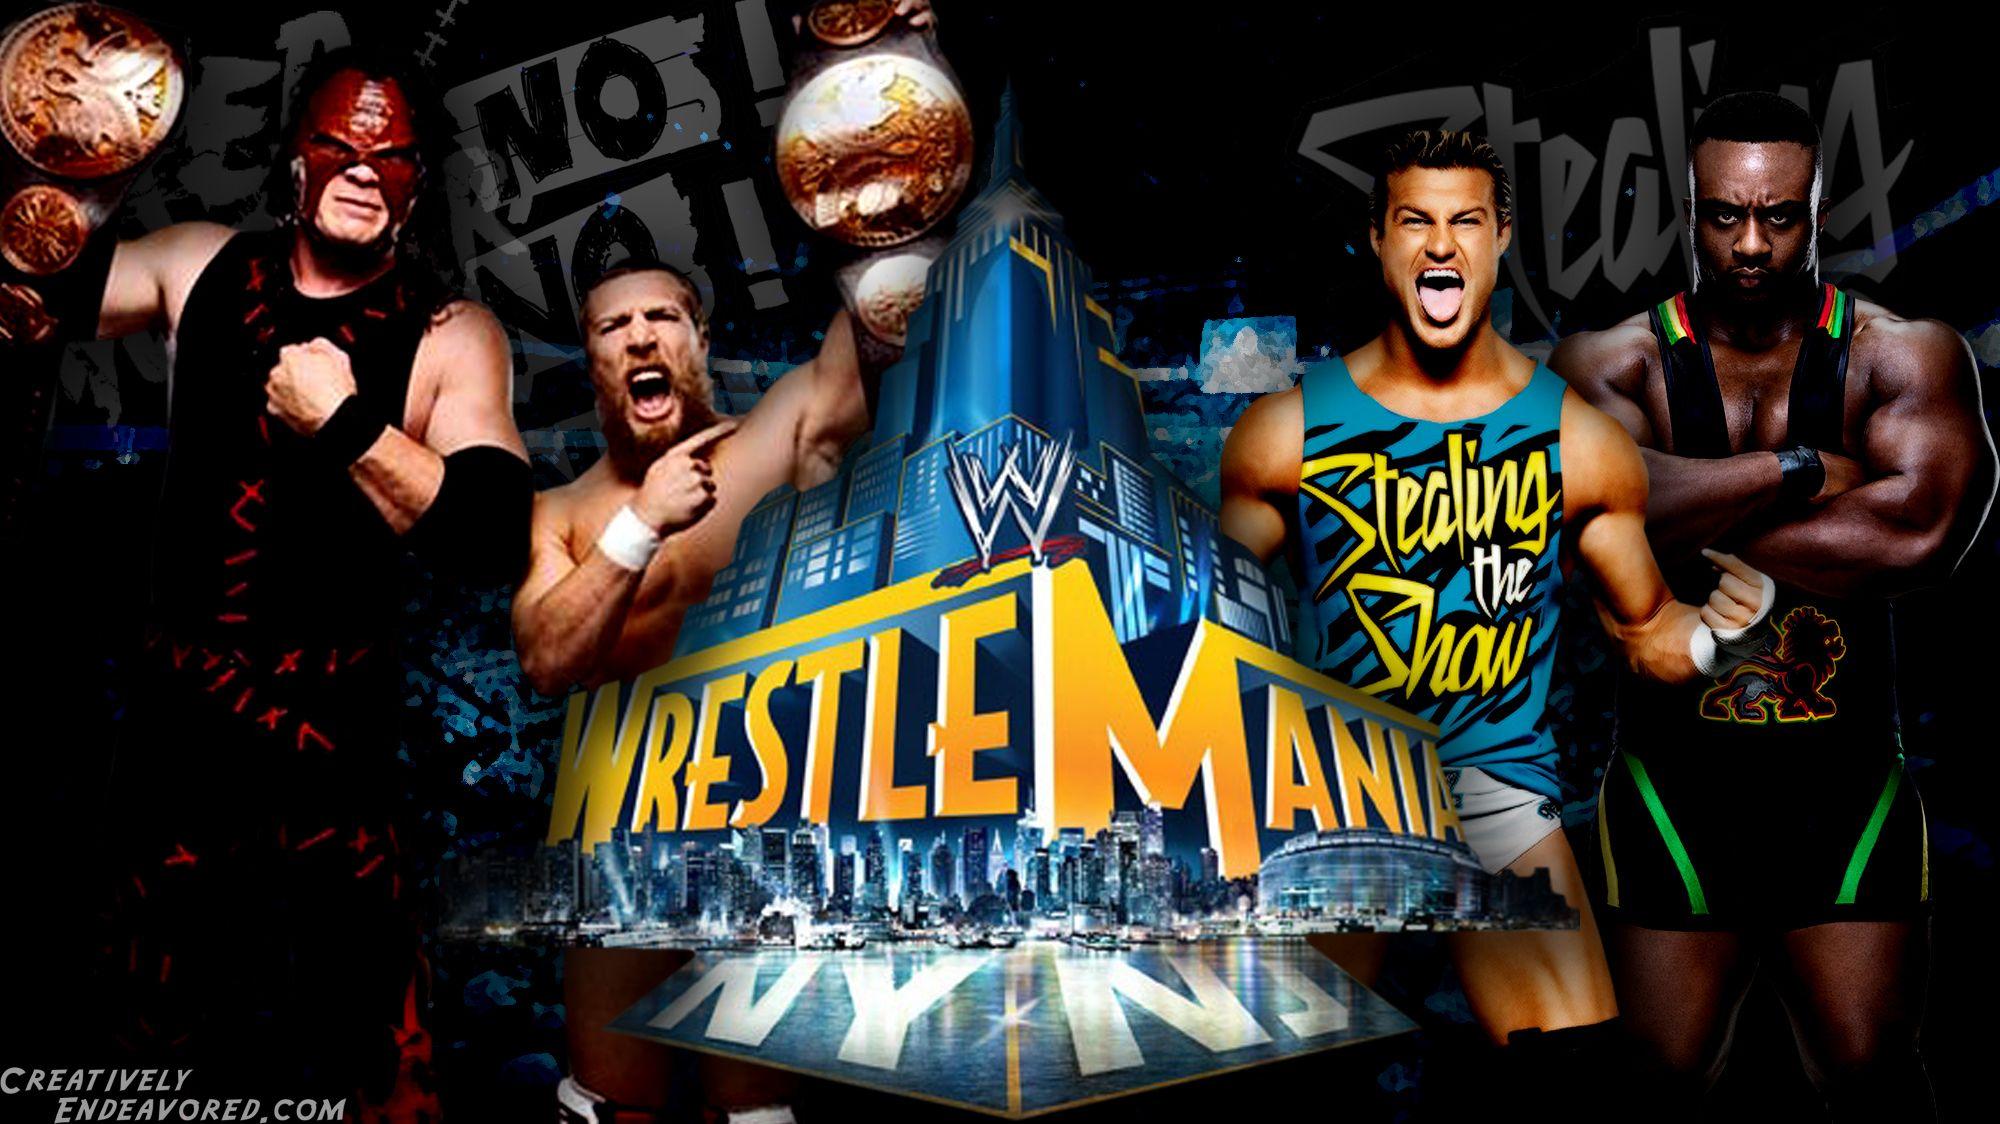 Weekend WrestleMania Wallpaper: Team Hell No vs Dolph Ziggler